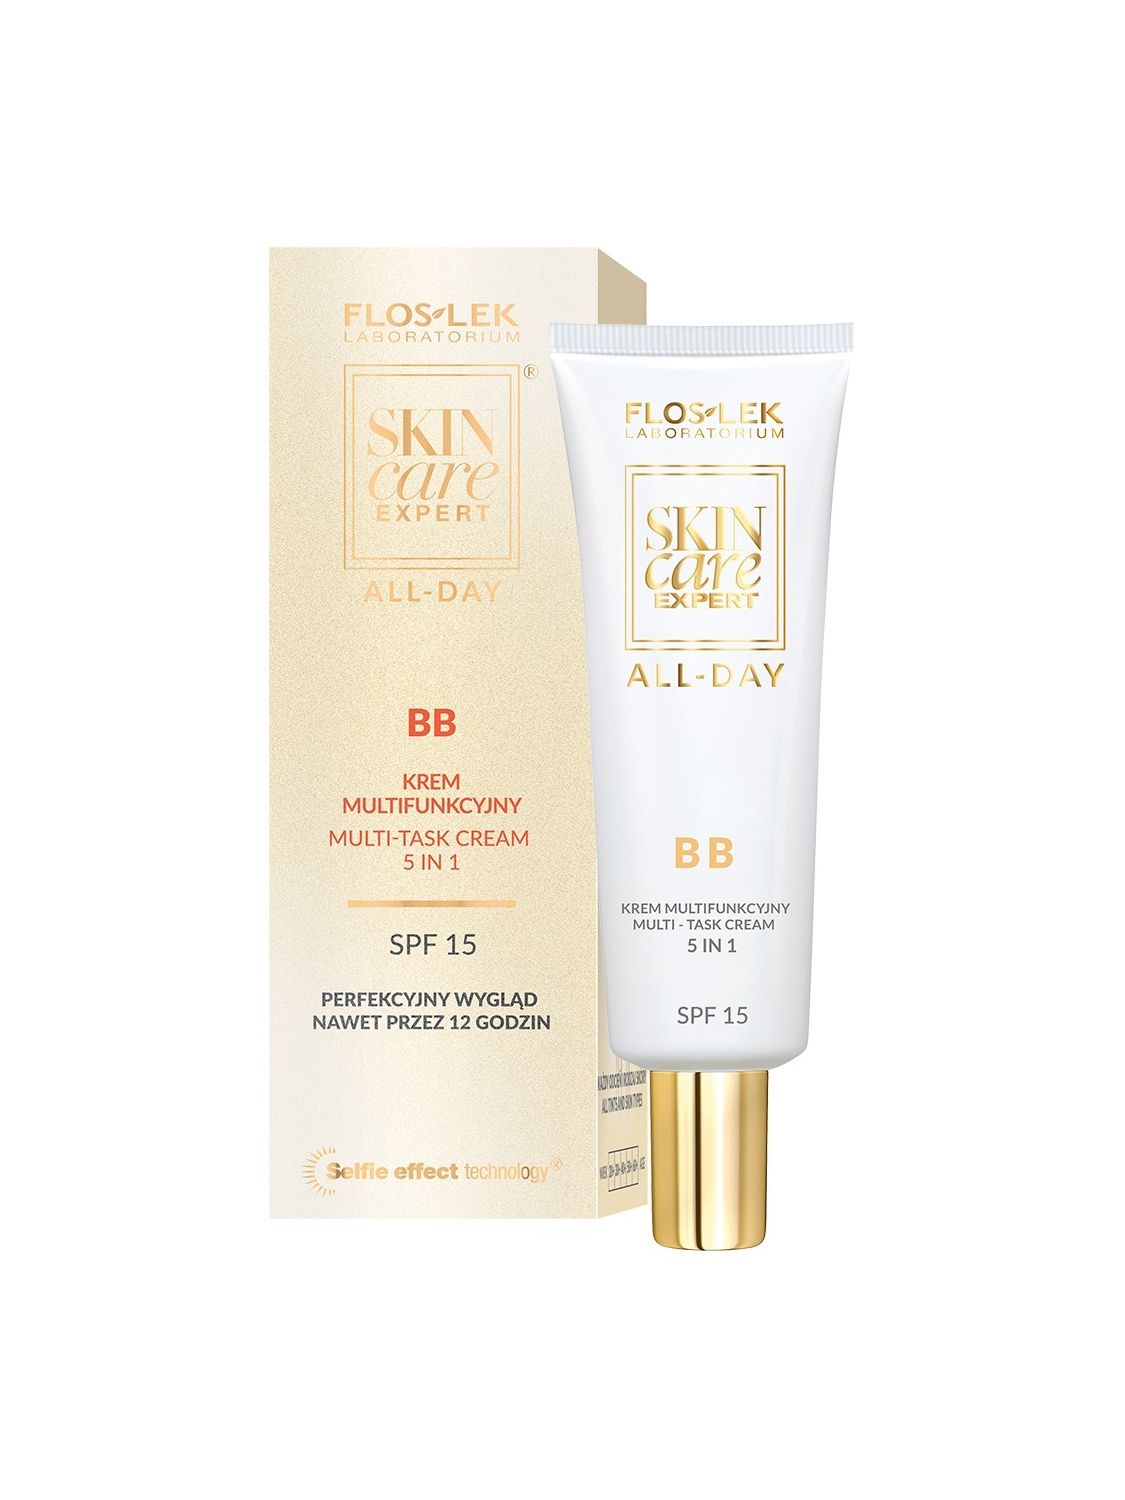 Floslek Skin care Expert ALL DAY BB cream